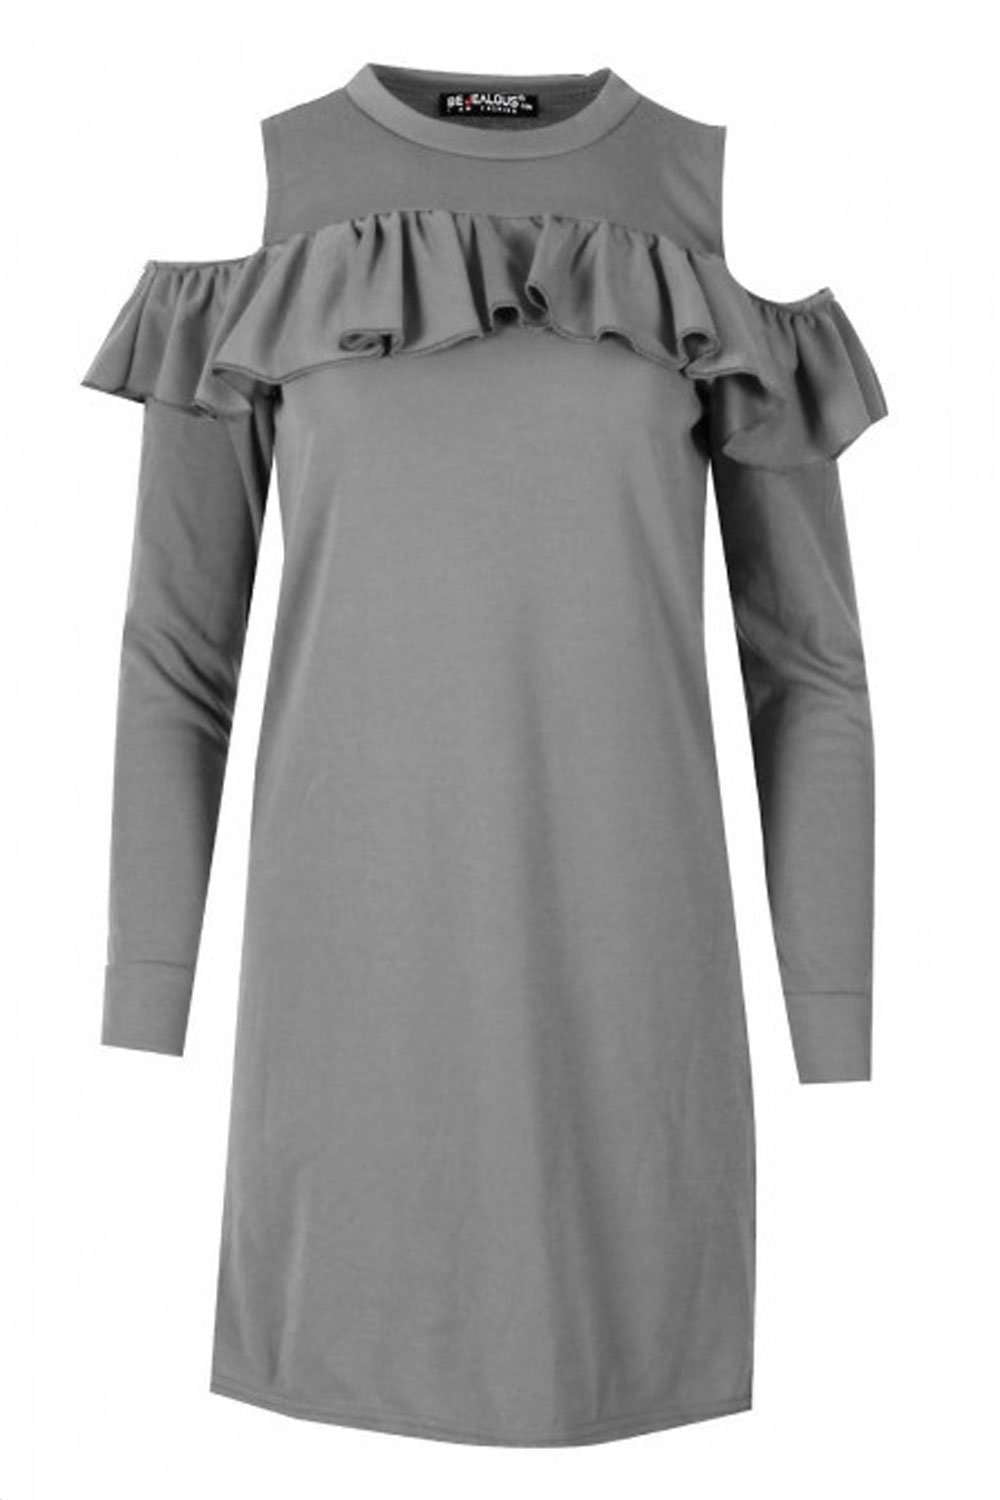 Layla Cold Shoulder Sweatshirt Dress - bejealous-com